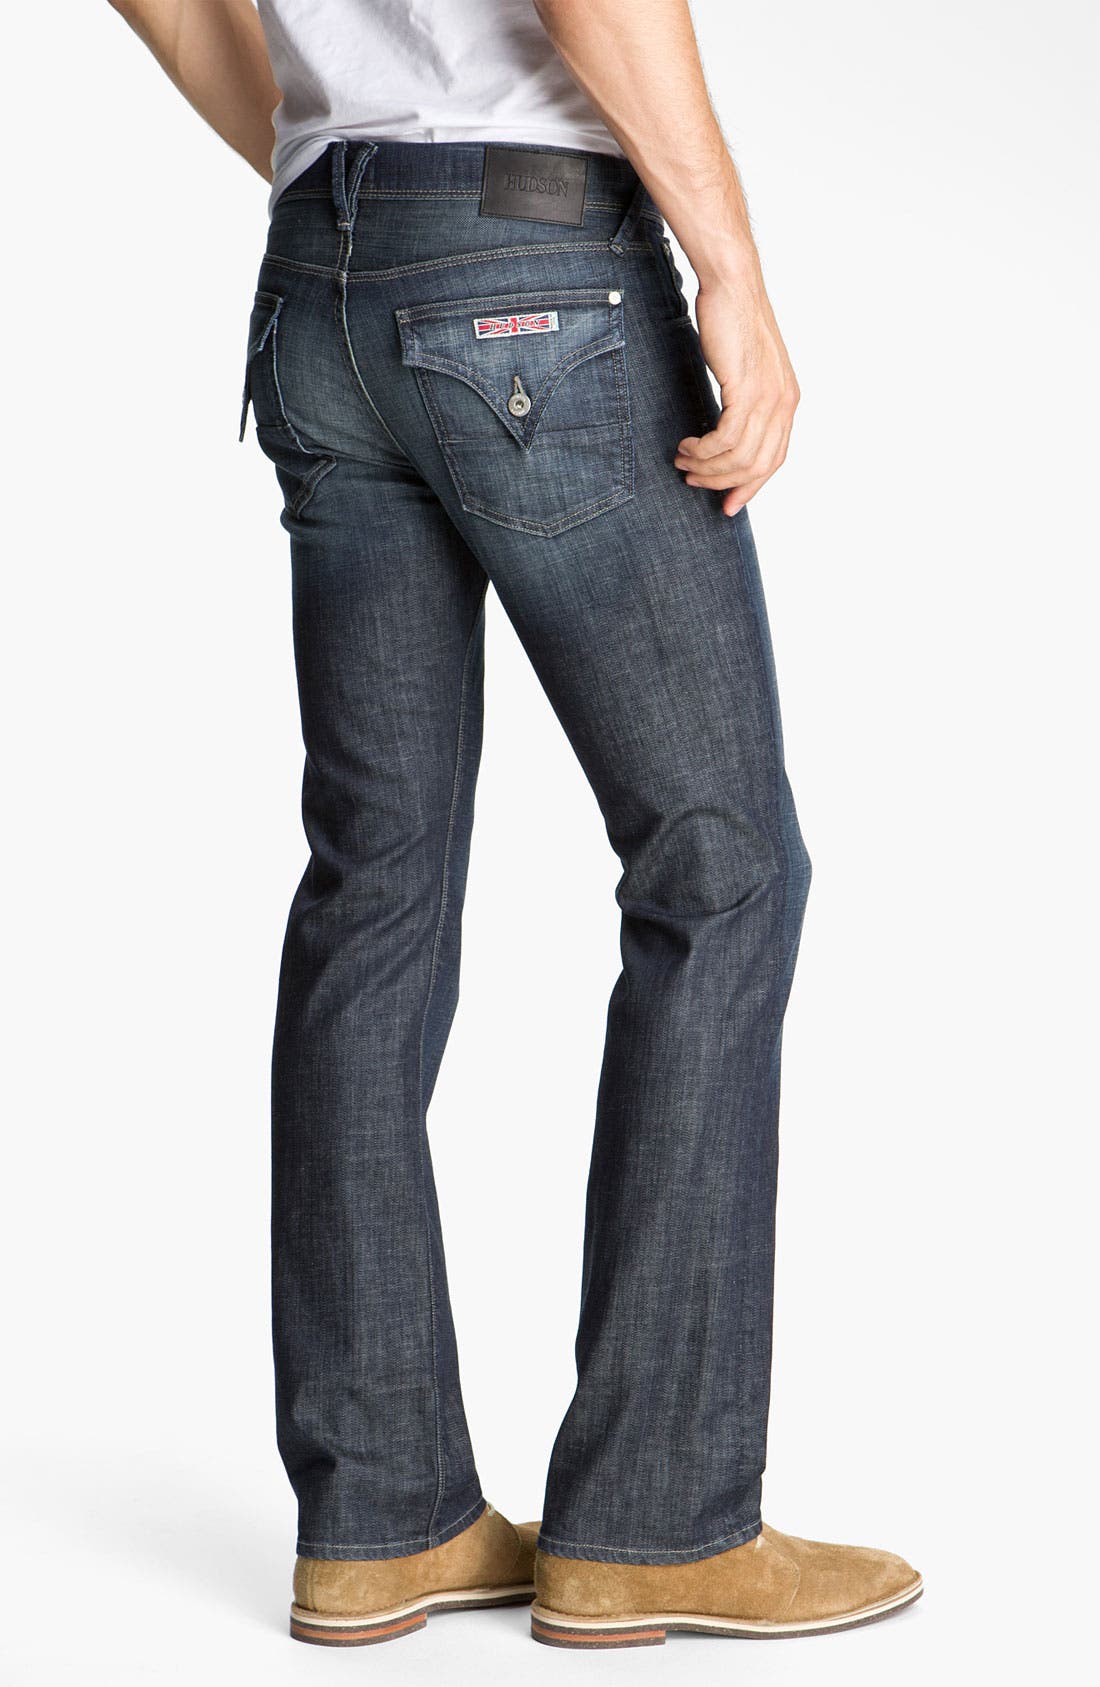 hudson clifton jeans